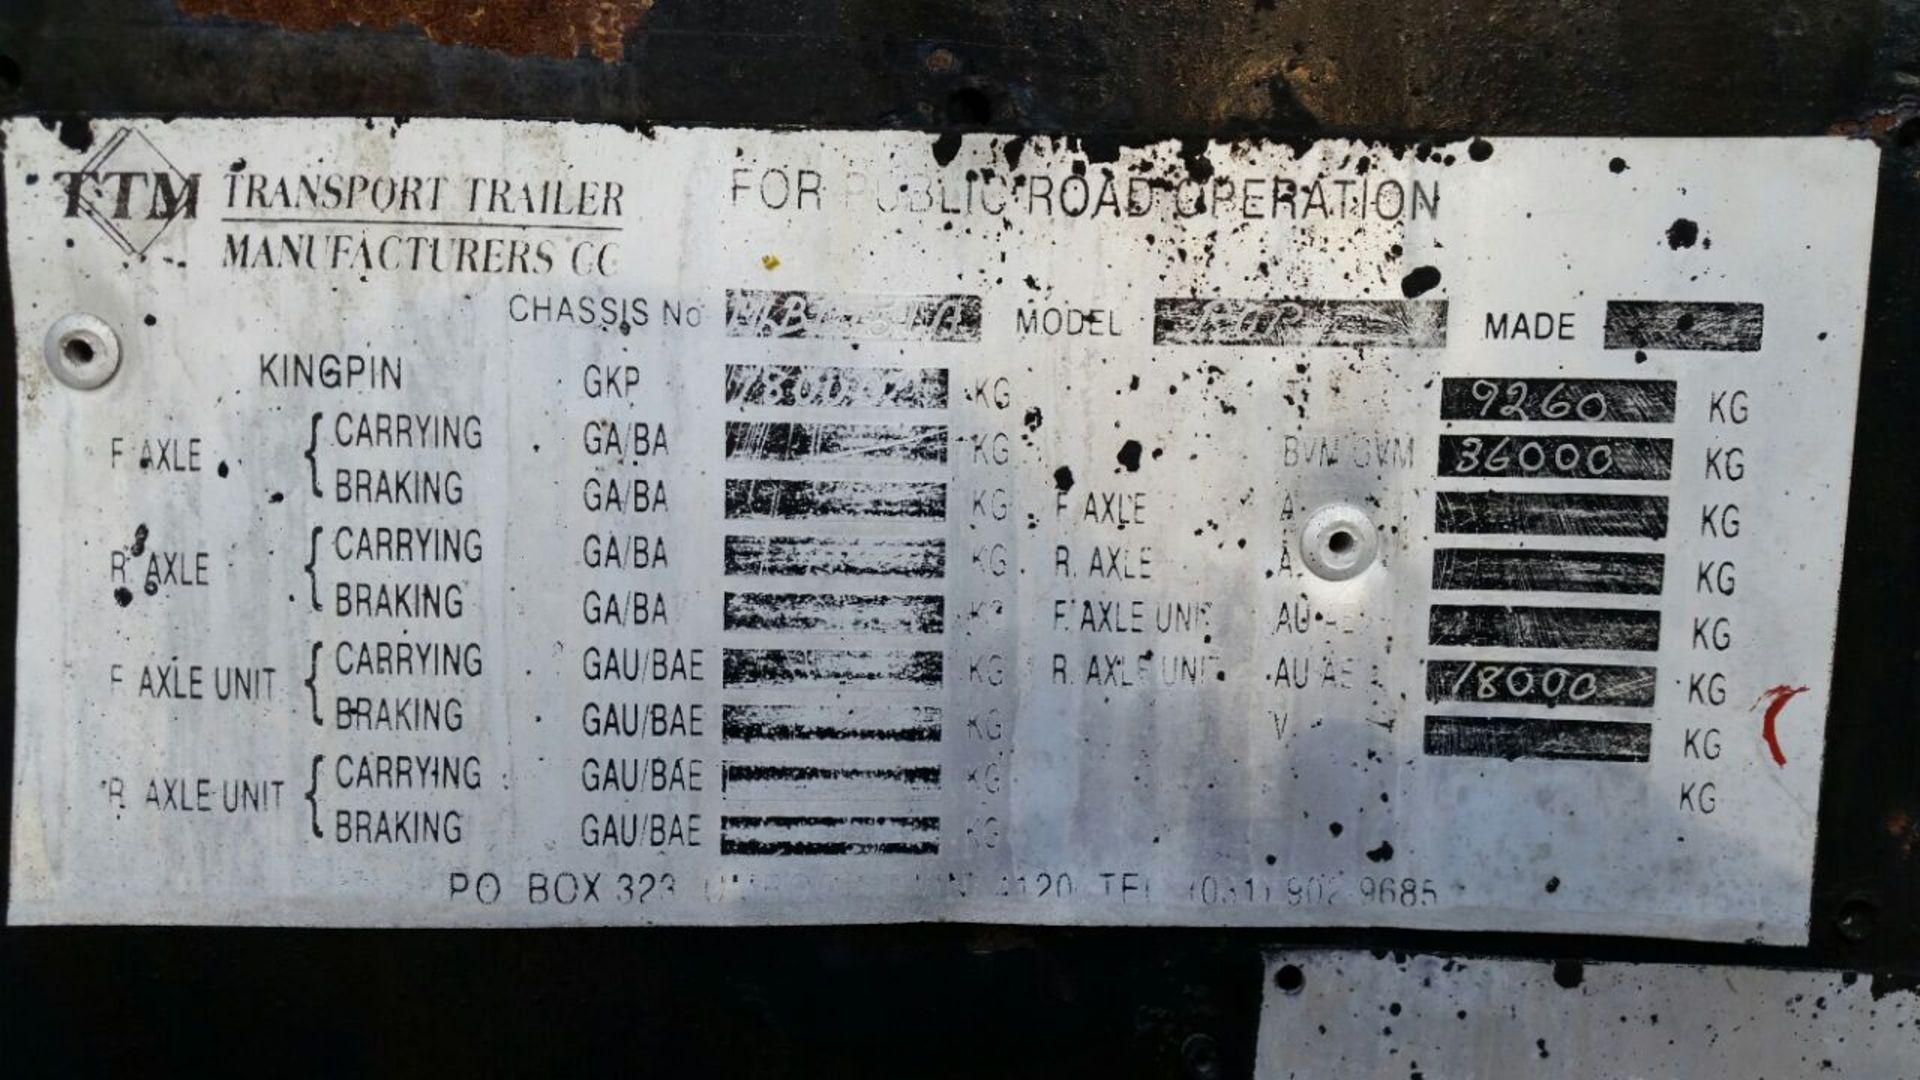 1995 TTM TRI-AXLE MILD STEEL BITUMEN TRAILER - (ND309823) - Image 4 of 5